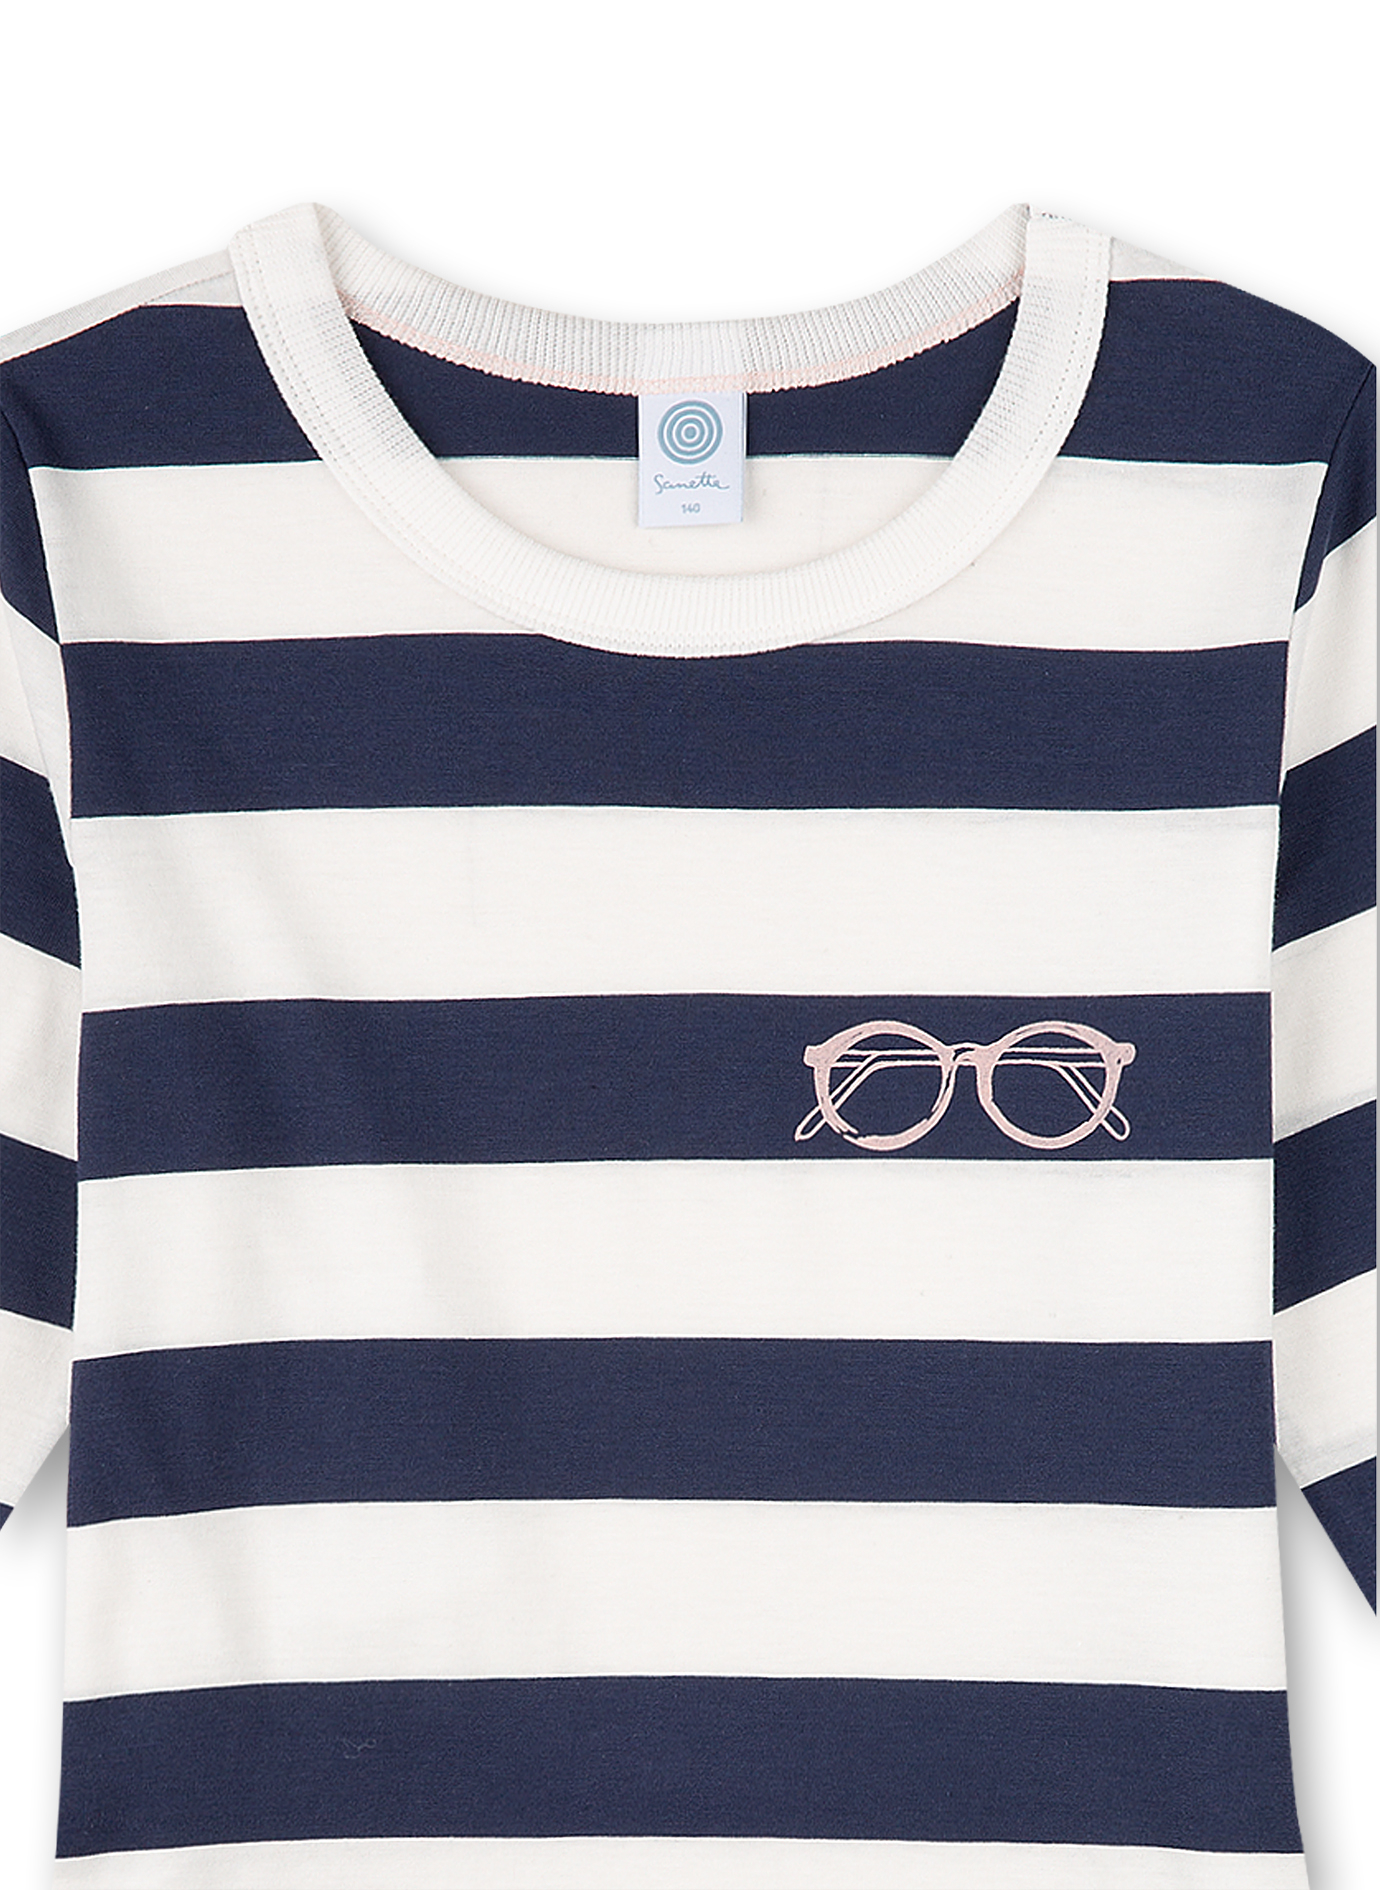 Mädchen-Nachthemd Dunkelblau-geringelt Glasses and Stripes